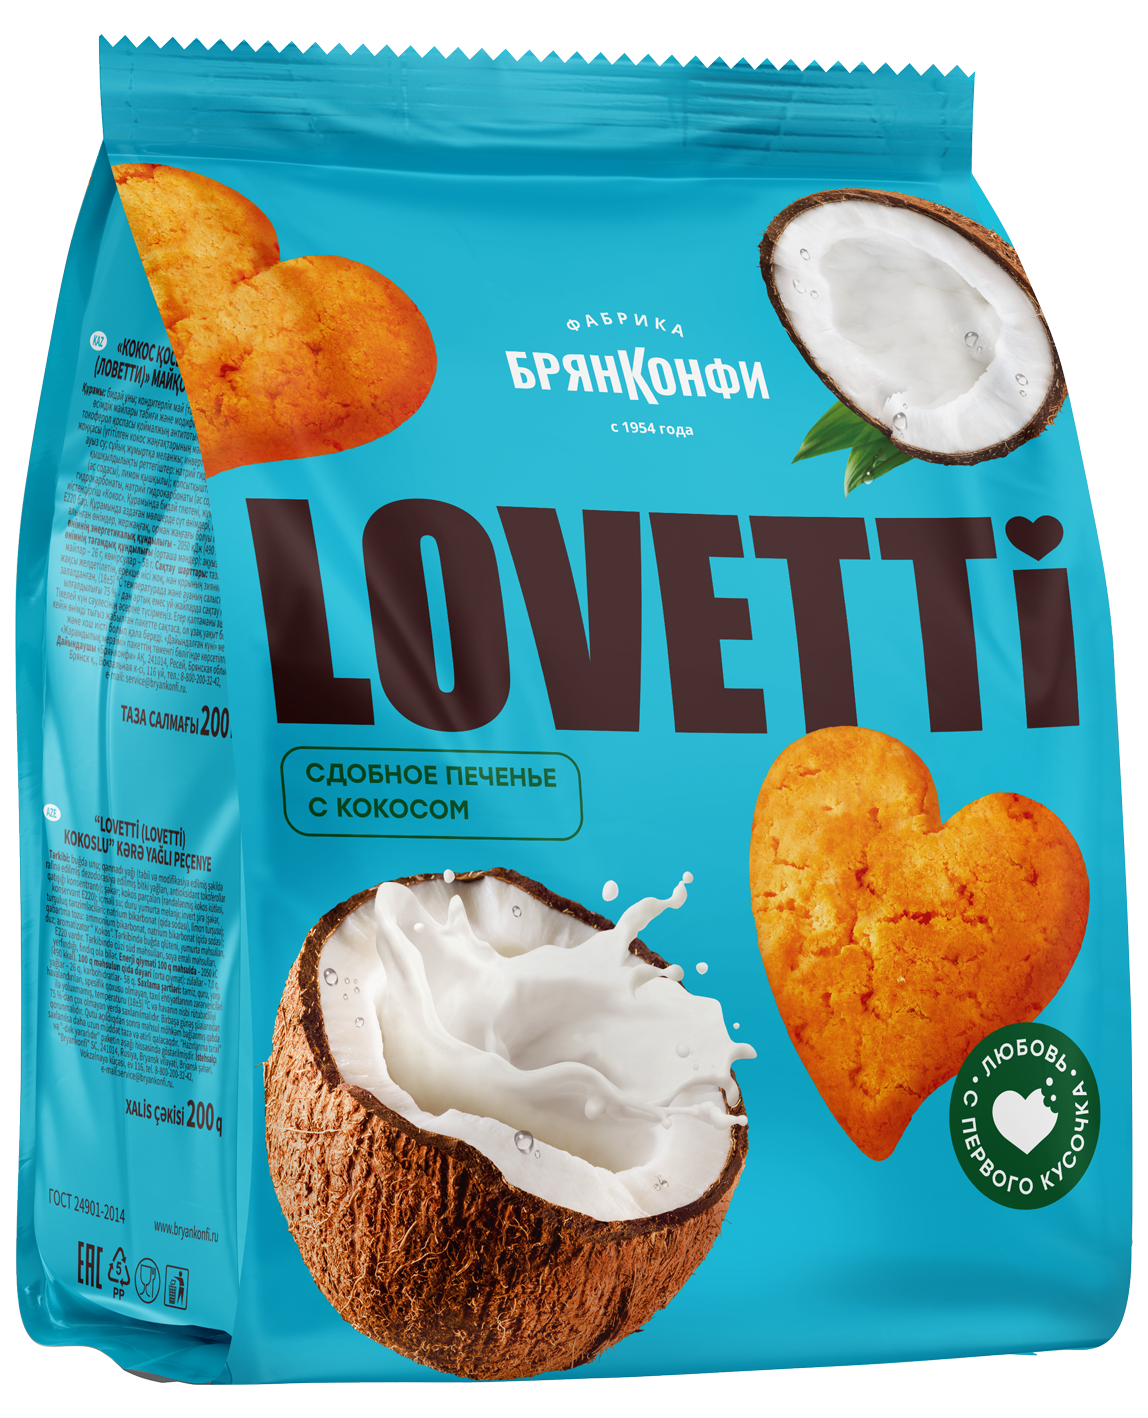 Печенье "Lovetti" с кокосом 200г/Брянконфи